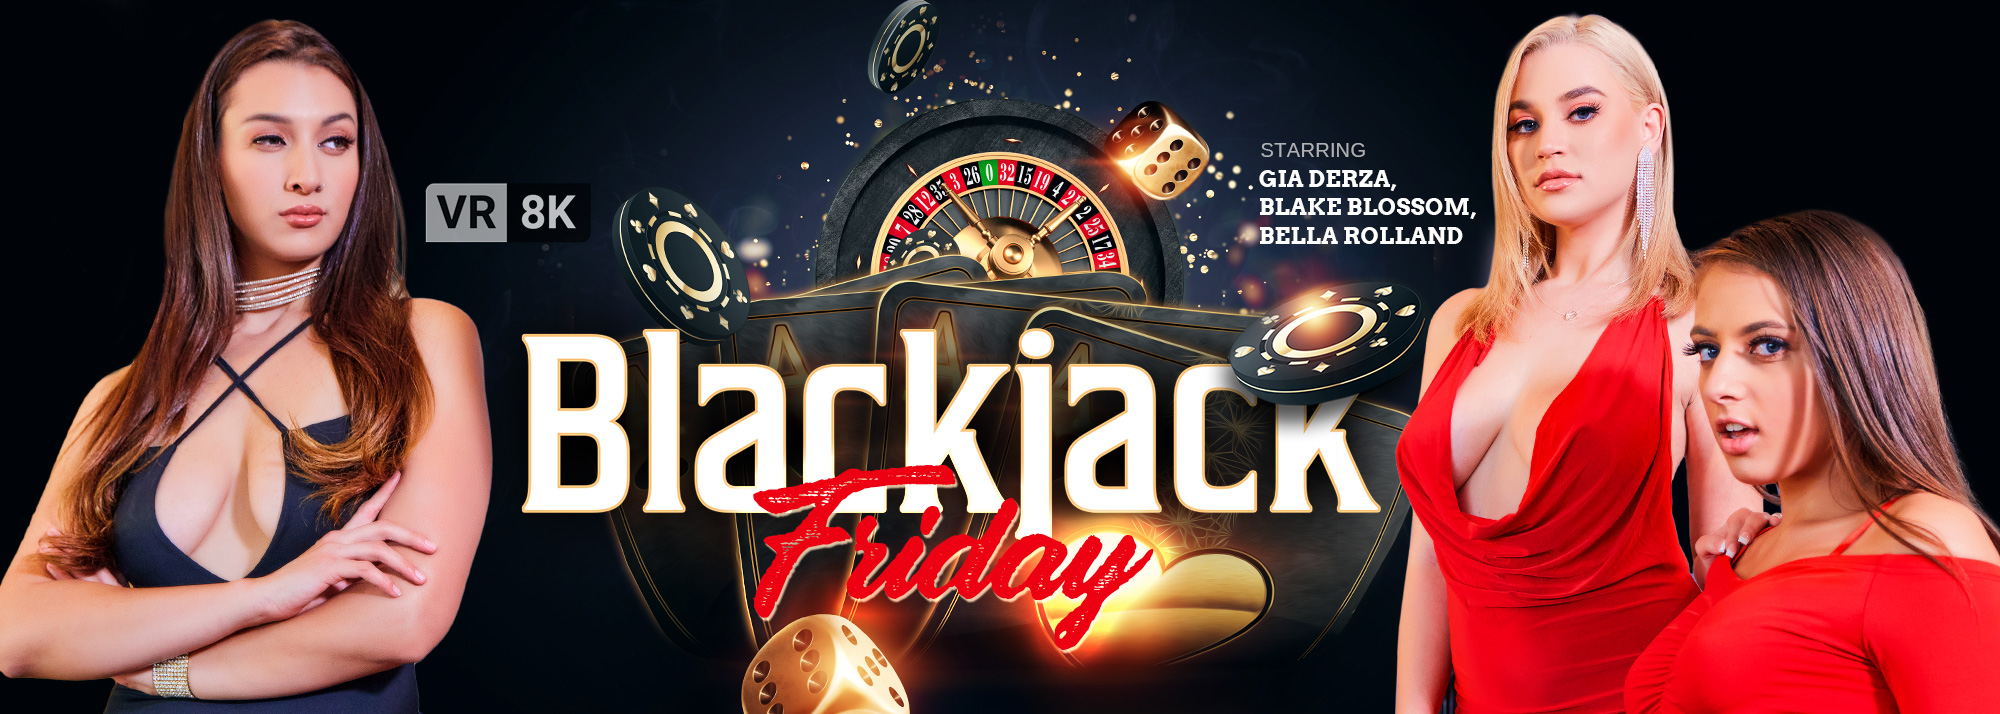 Blackjack Friday with Blake Blossom  Slideshow